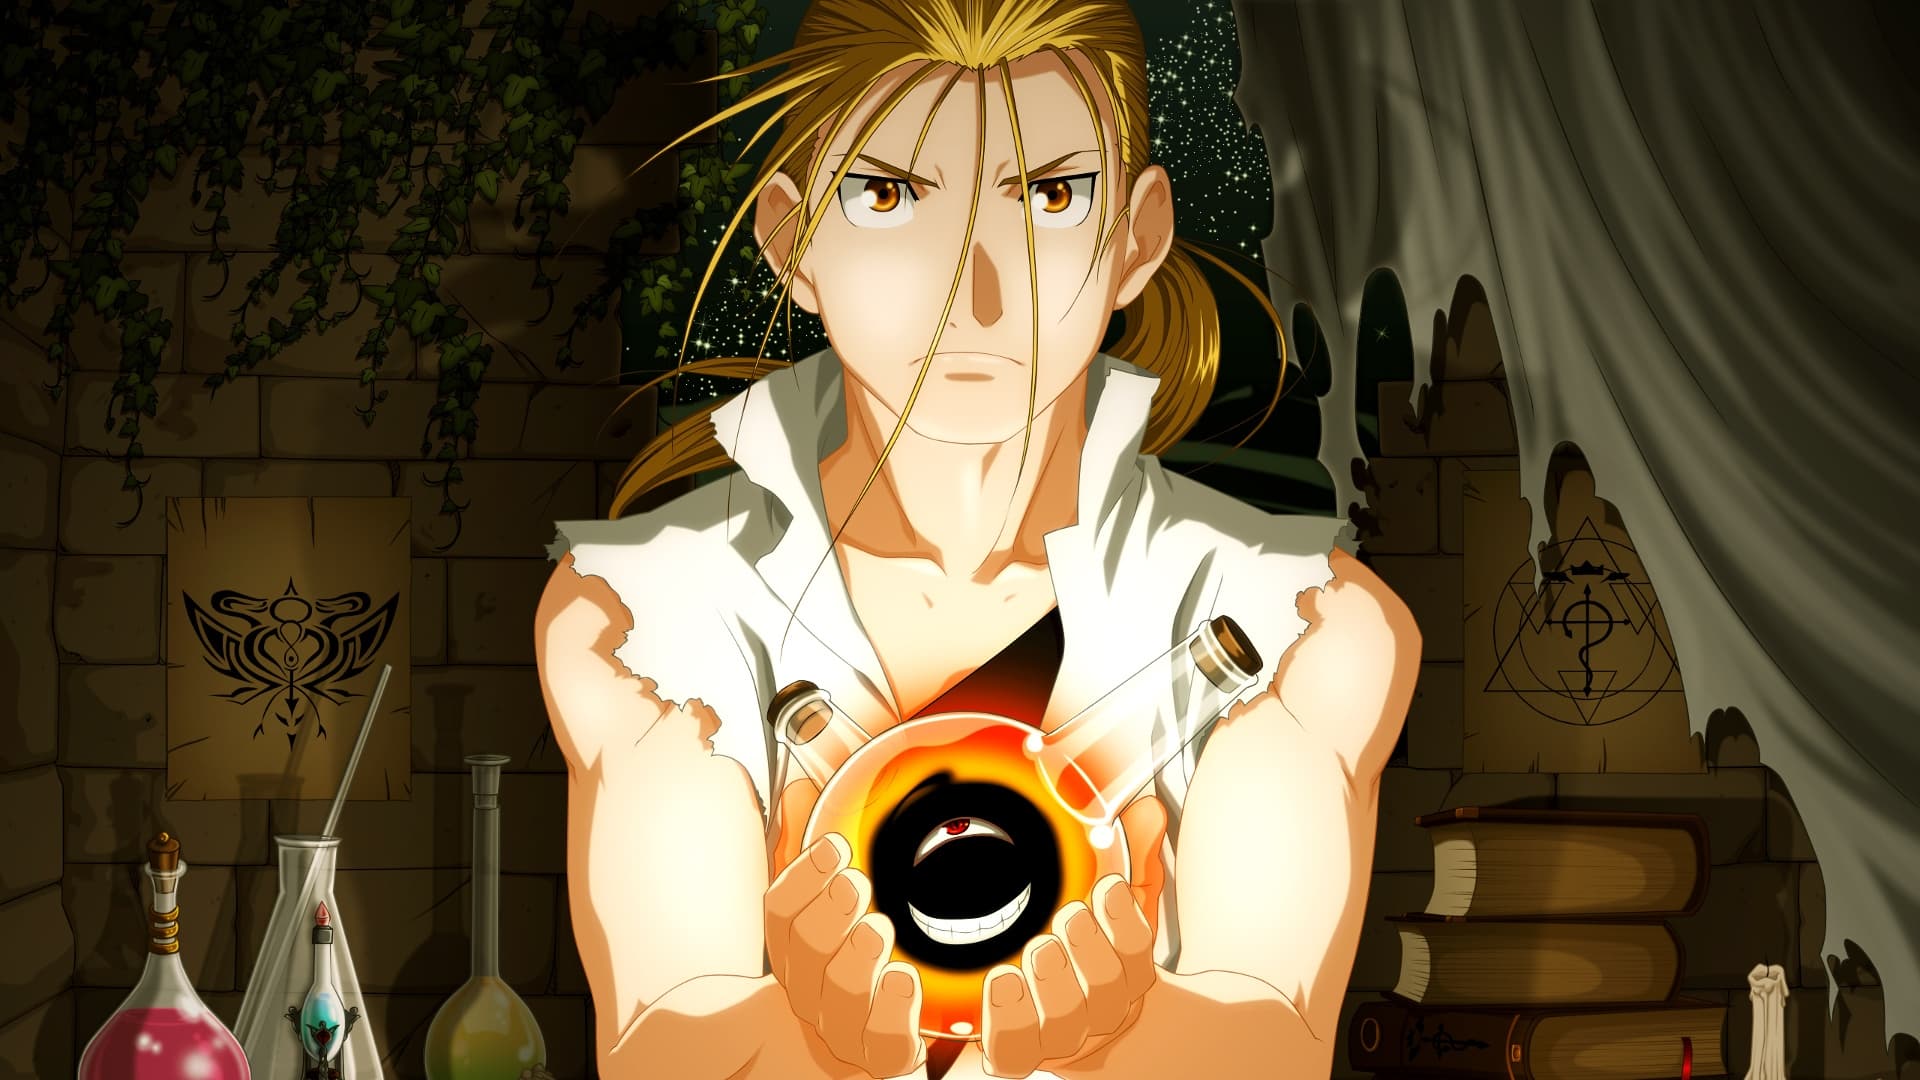 Fullmetal Alchemist: Shamballa hódítója